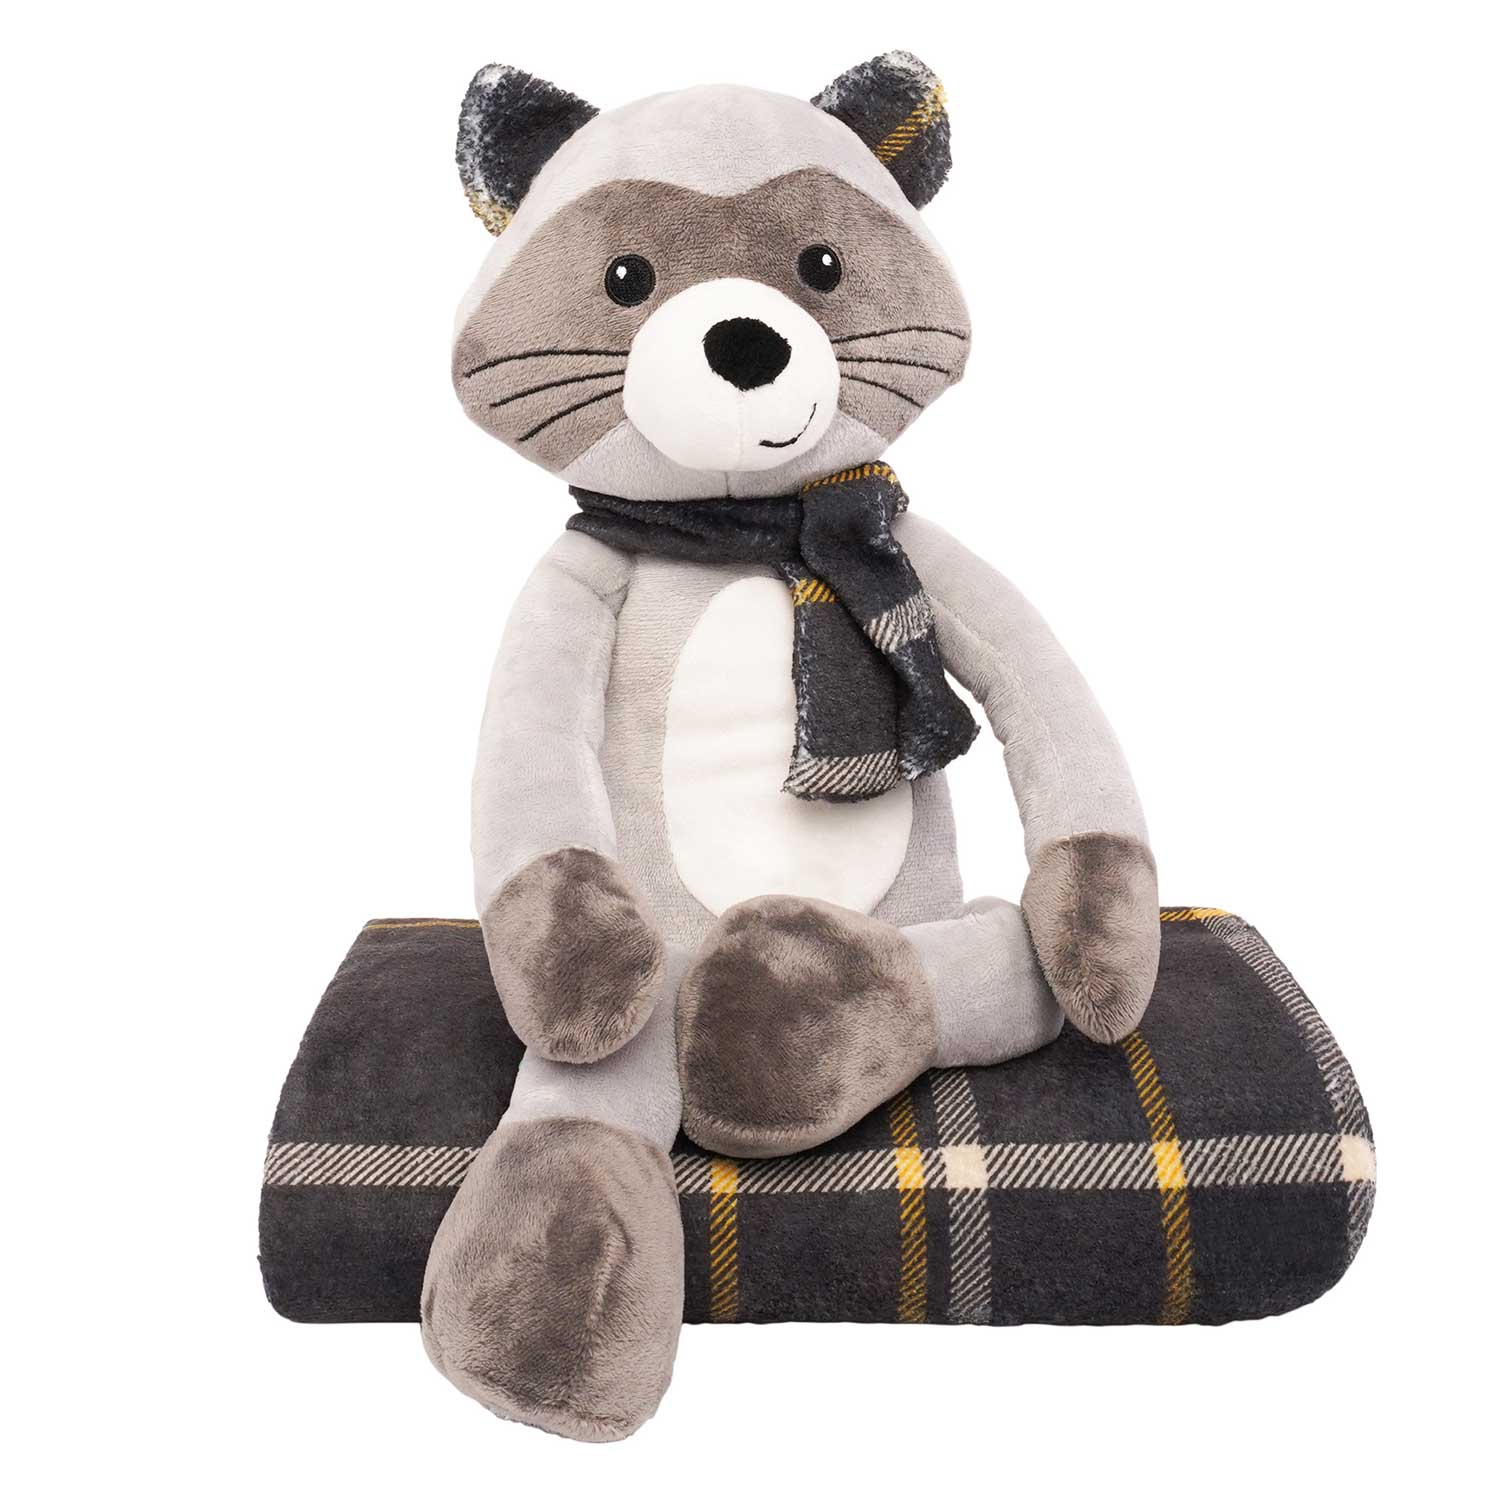 Plush & blanket set, 50"x60" - Raccoon